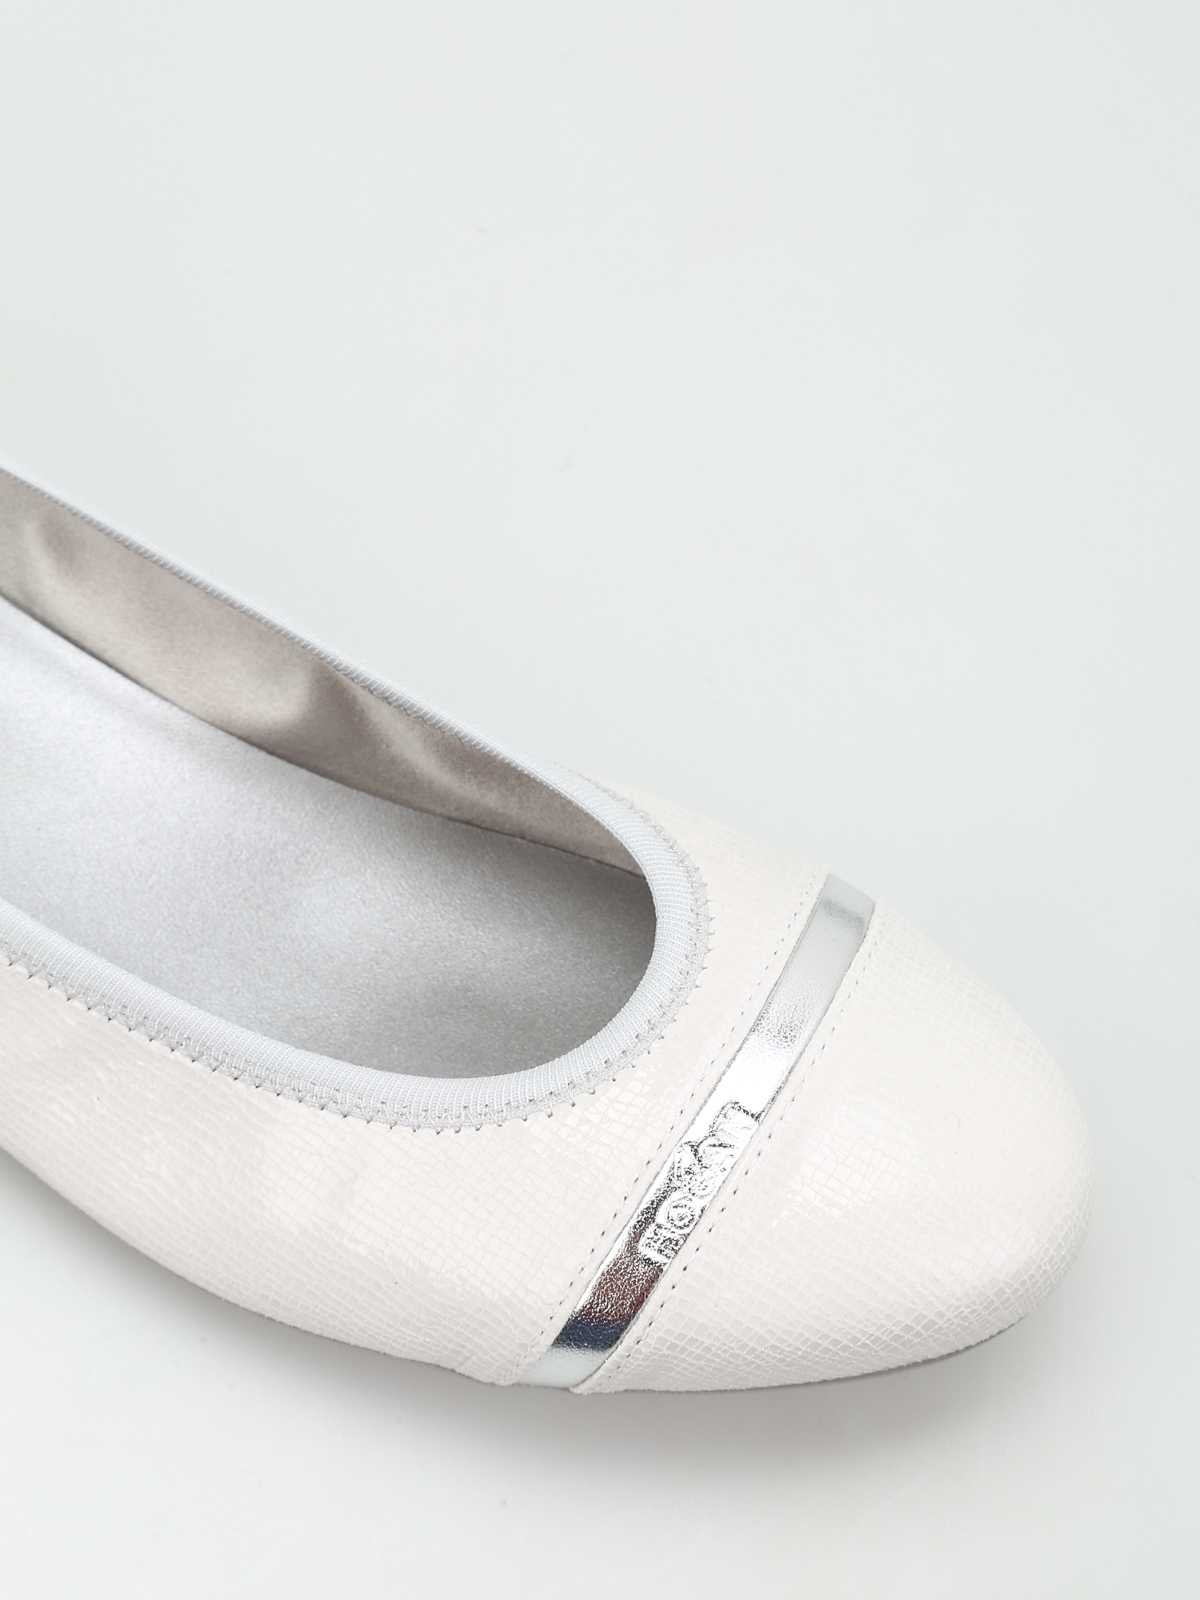 Markeer Pardon Oost Timor Flat shoes Hogan - Wrap 144 crackle leather ballerinas - HXW14407124FP70351